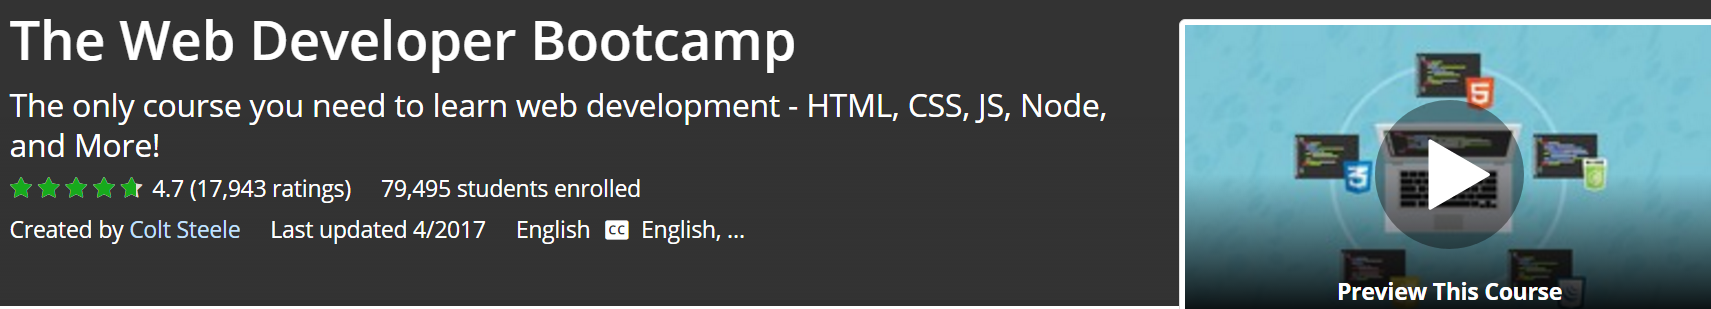 The Web Developer Bootcamp